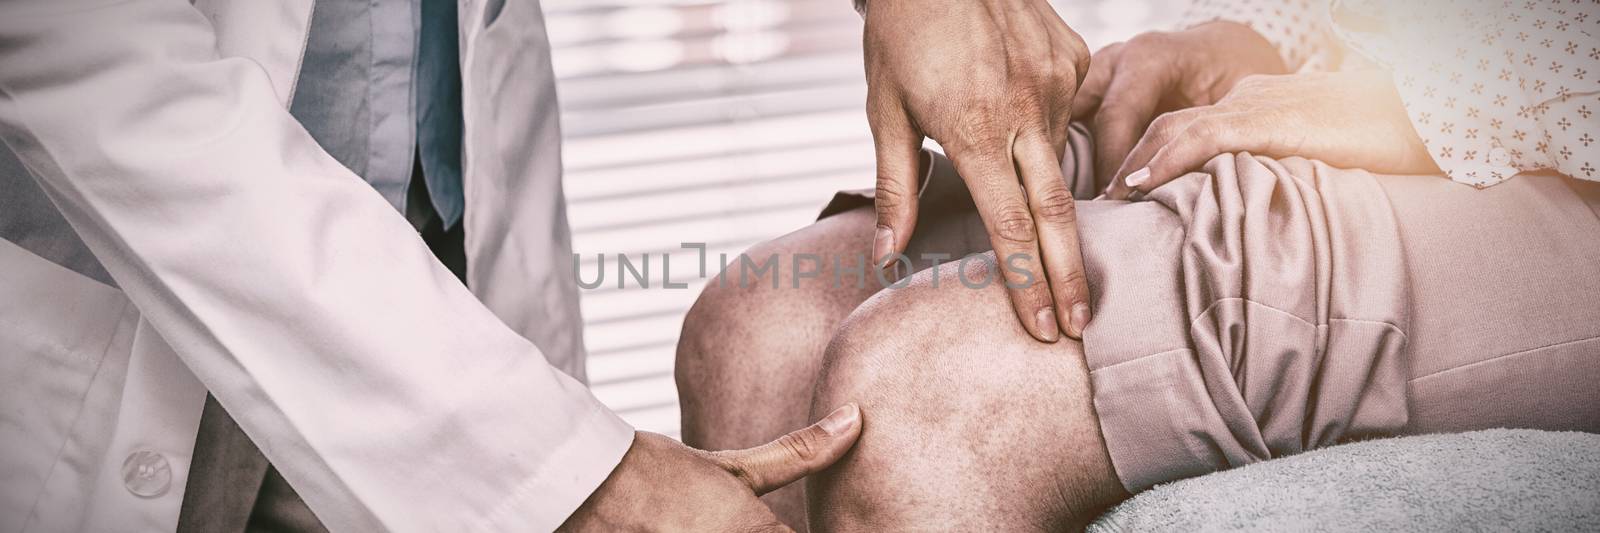 Doctor examining patient knee by Wavebreakmedia